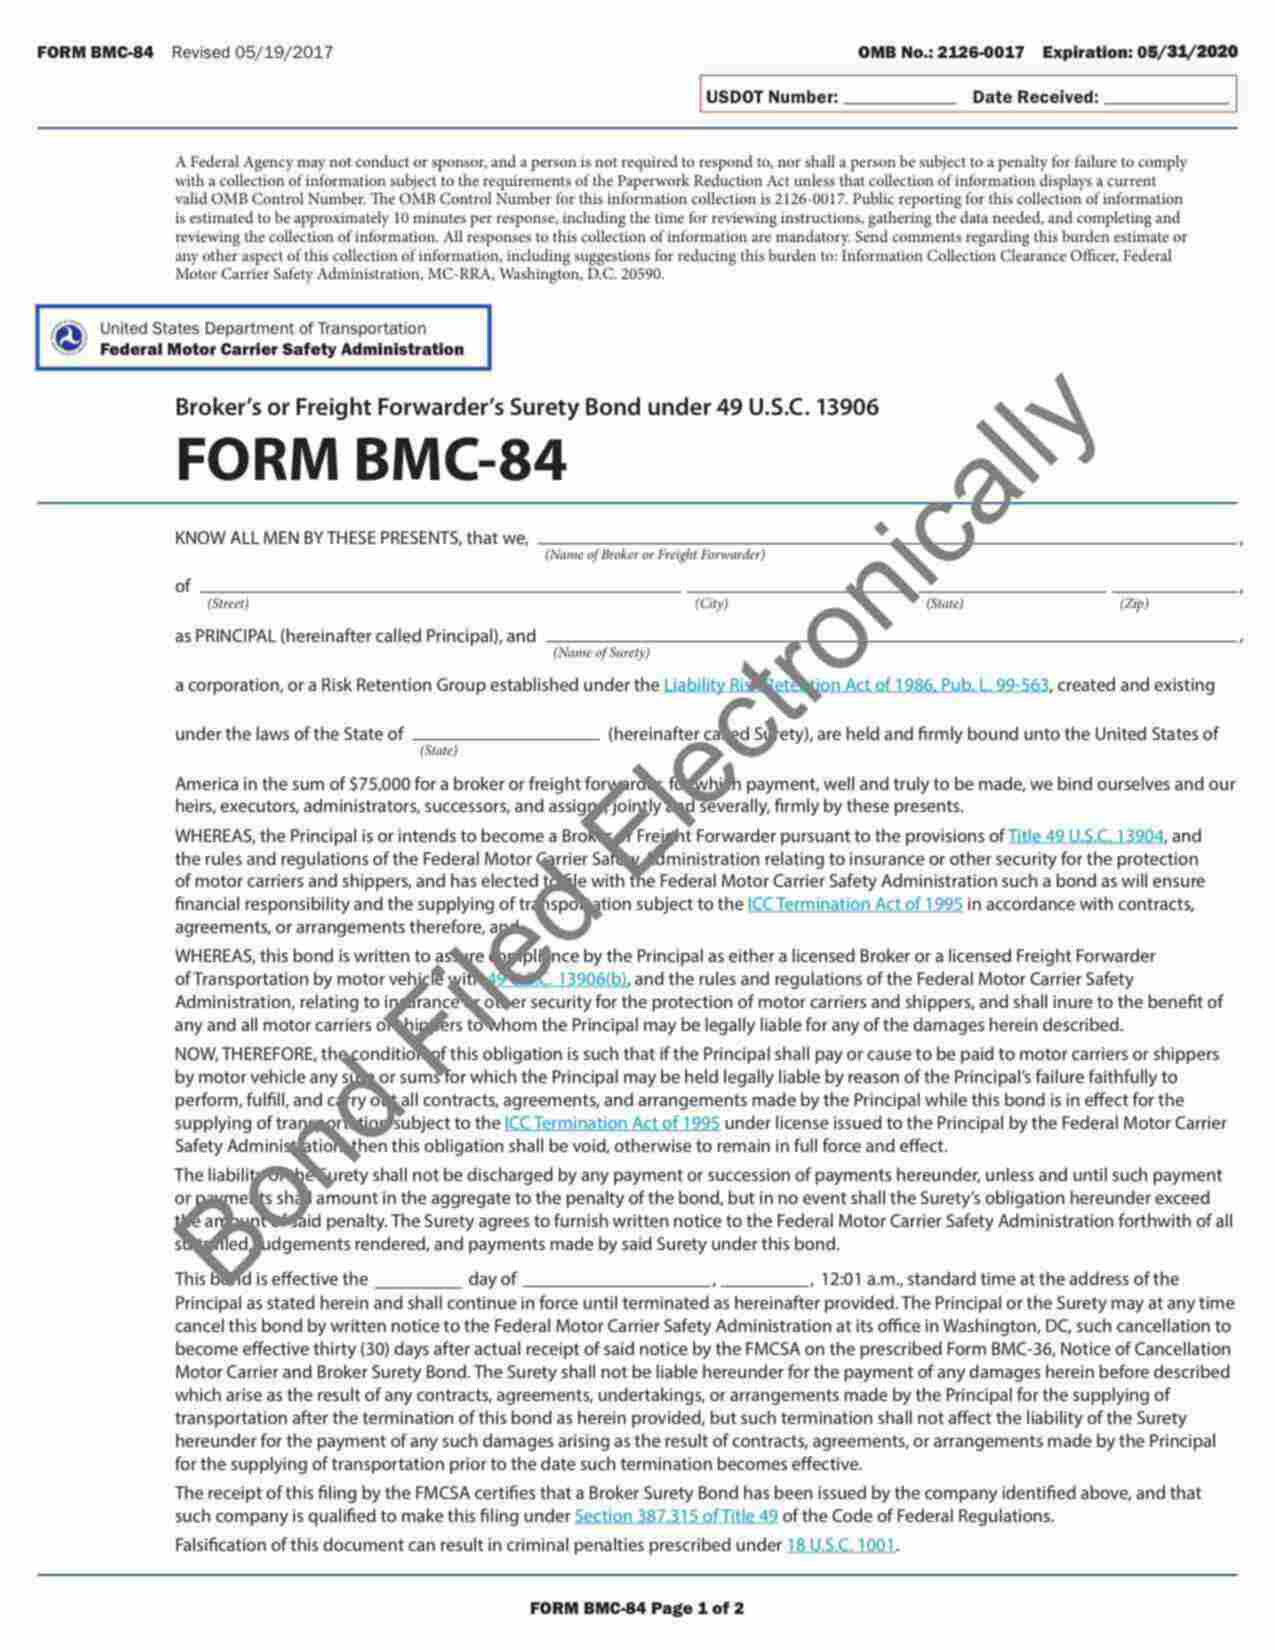 Alabama Property Broker or Freight Forwarder BMC-84 (ICC Broker) Bond Form